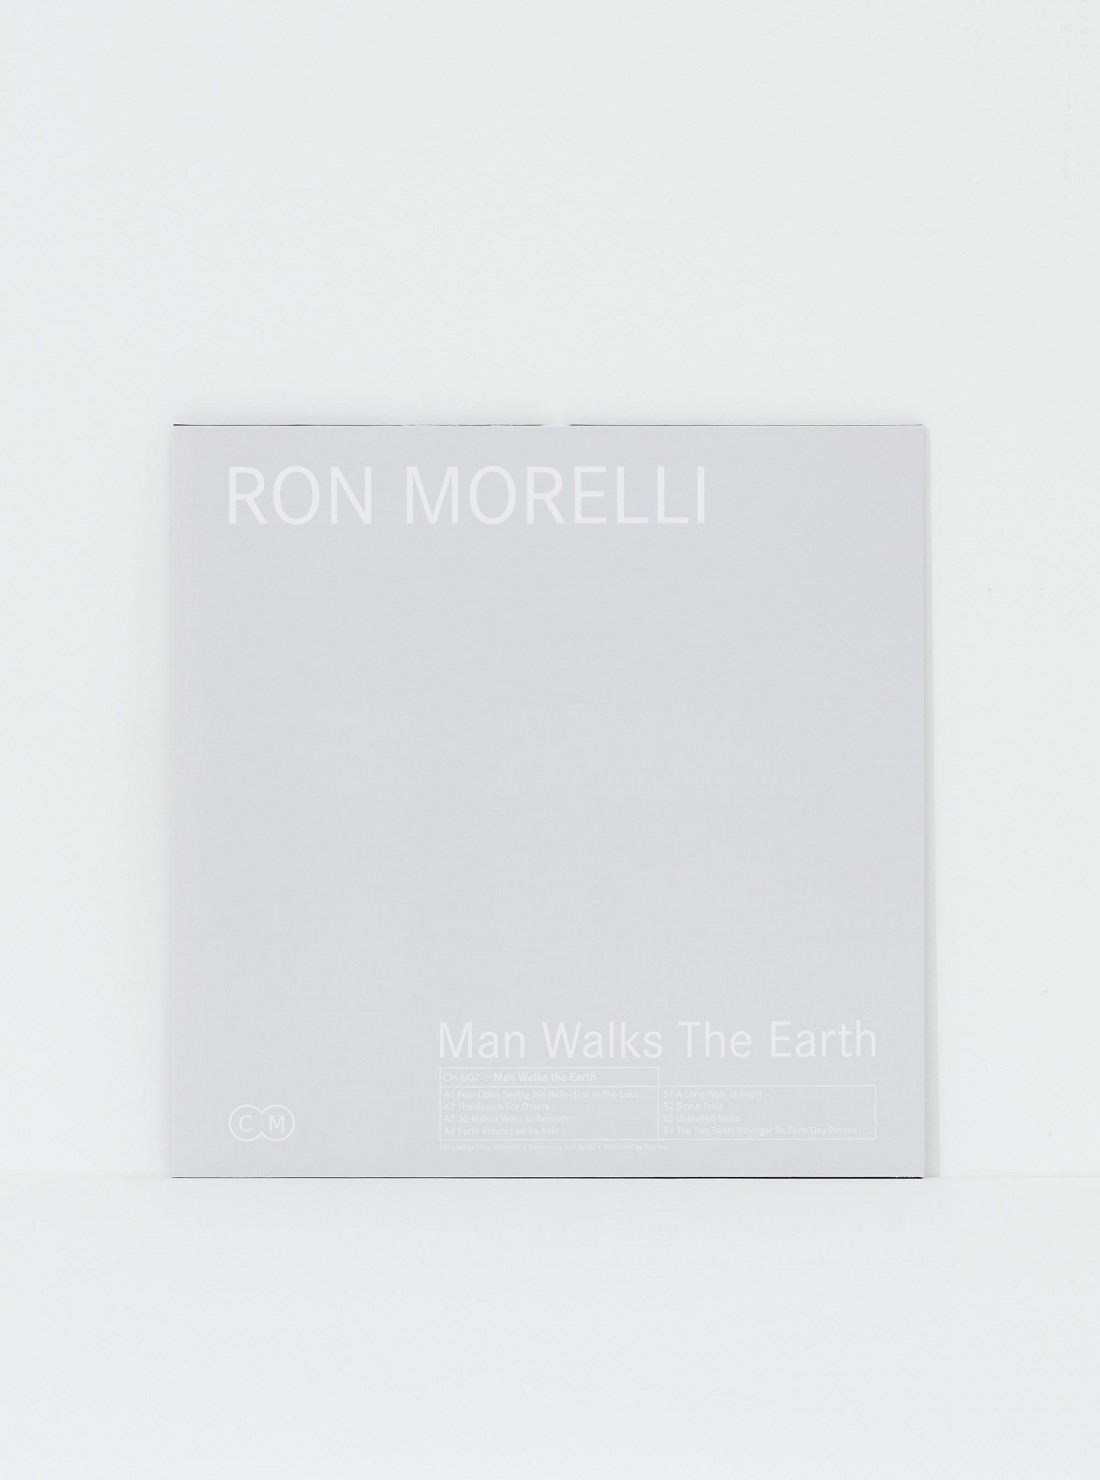 Ron Morelli Lp Mans Walks The Earth